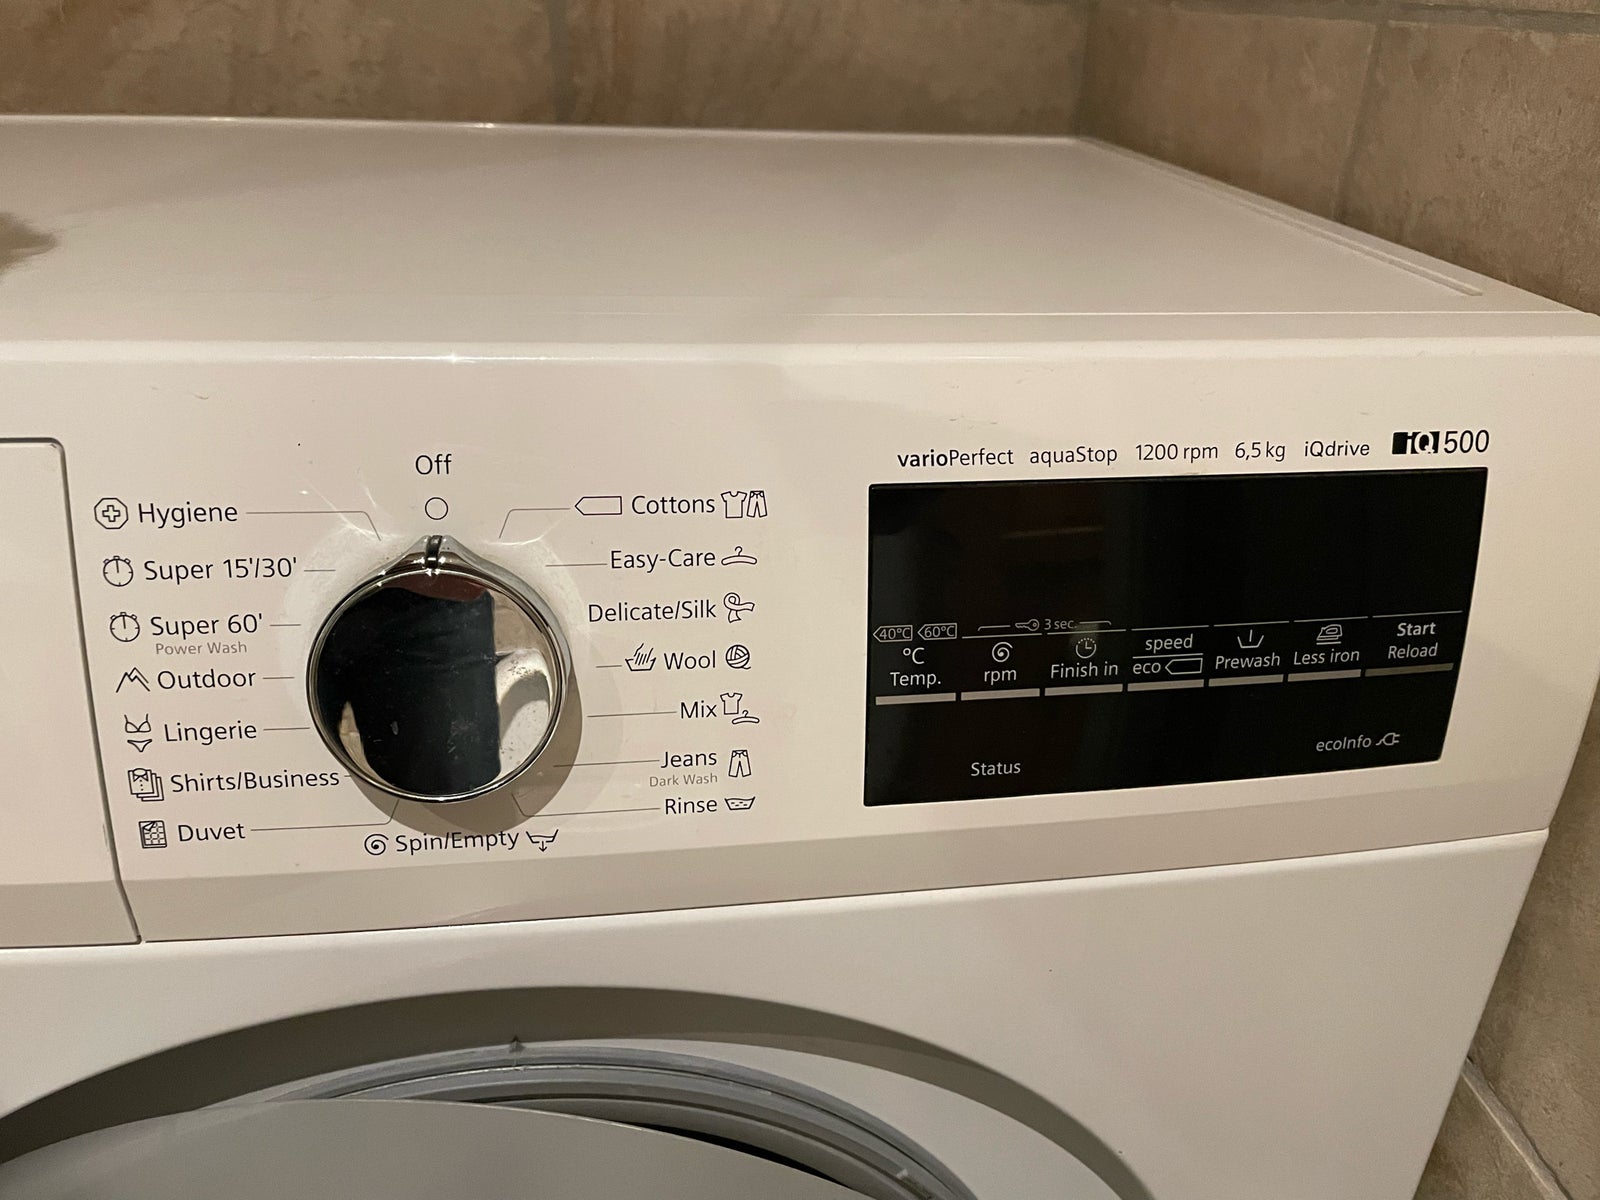 Siemens vaskemaskine, IQ500, frontbetjent